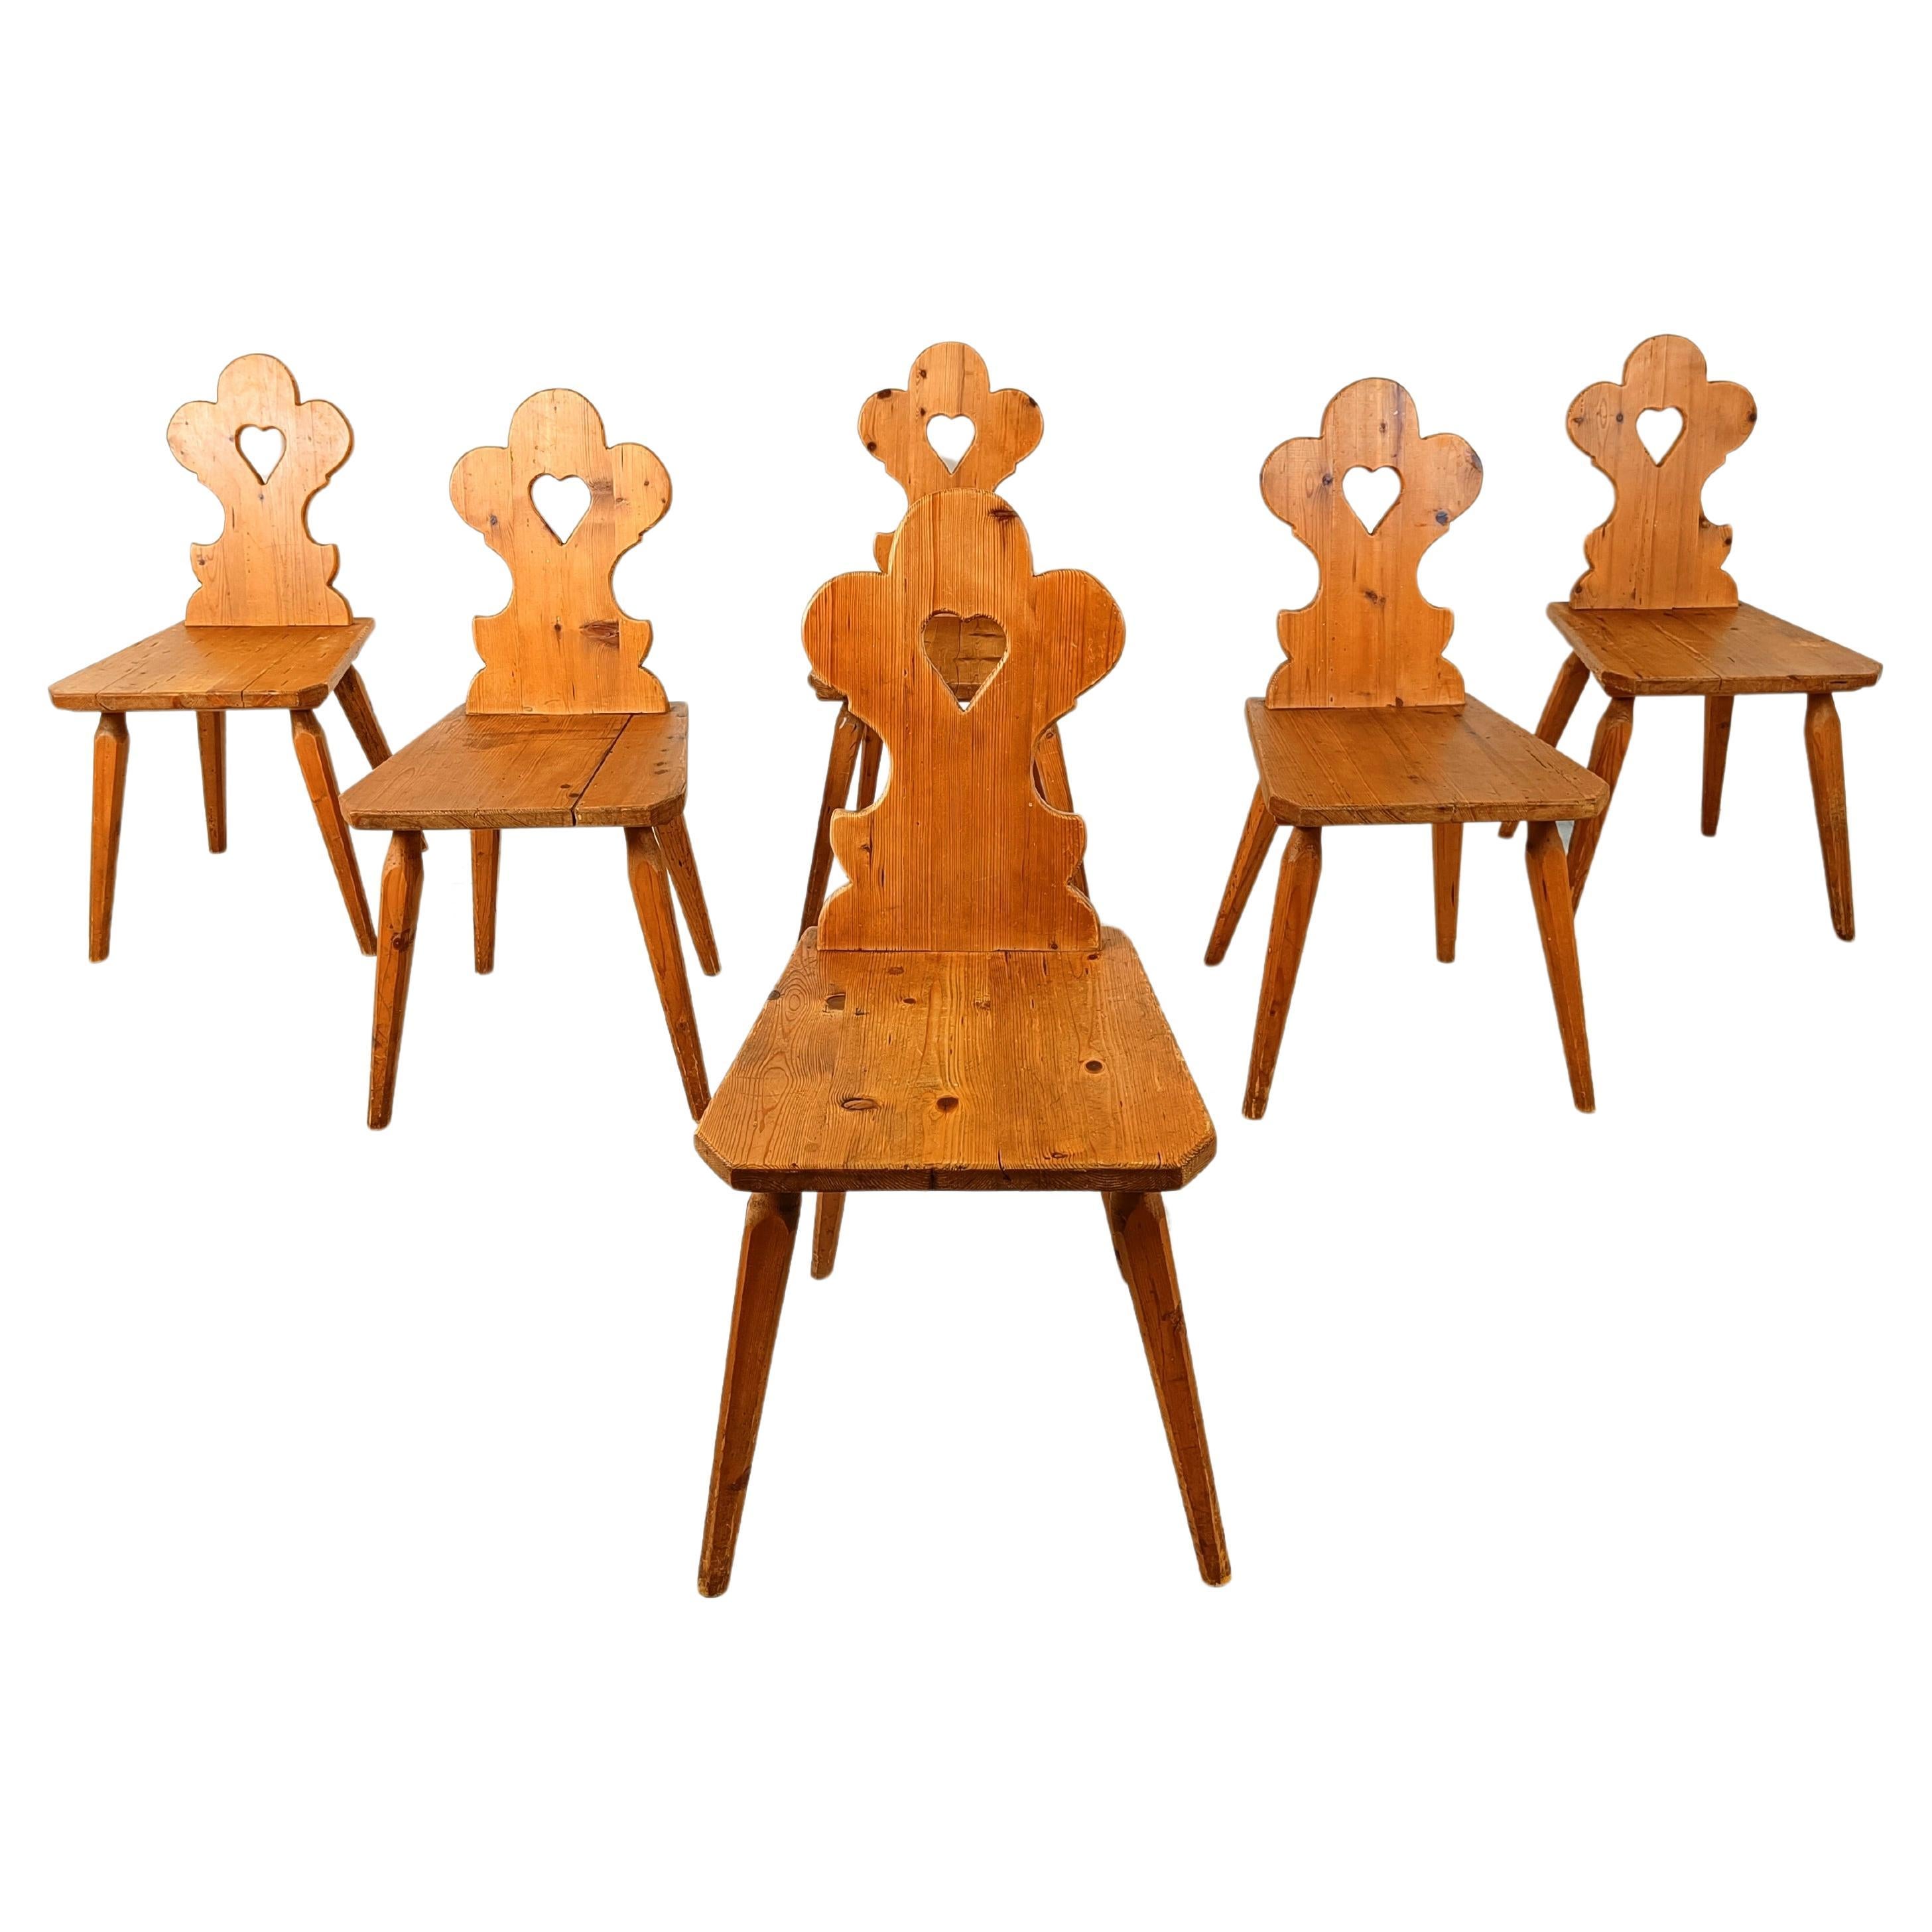 Vintage swedish folk art chairs, 1960s For Sale